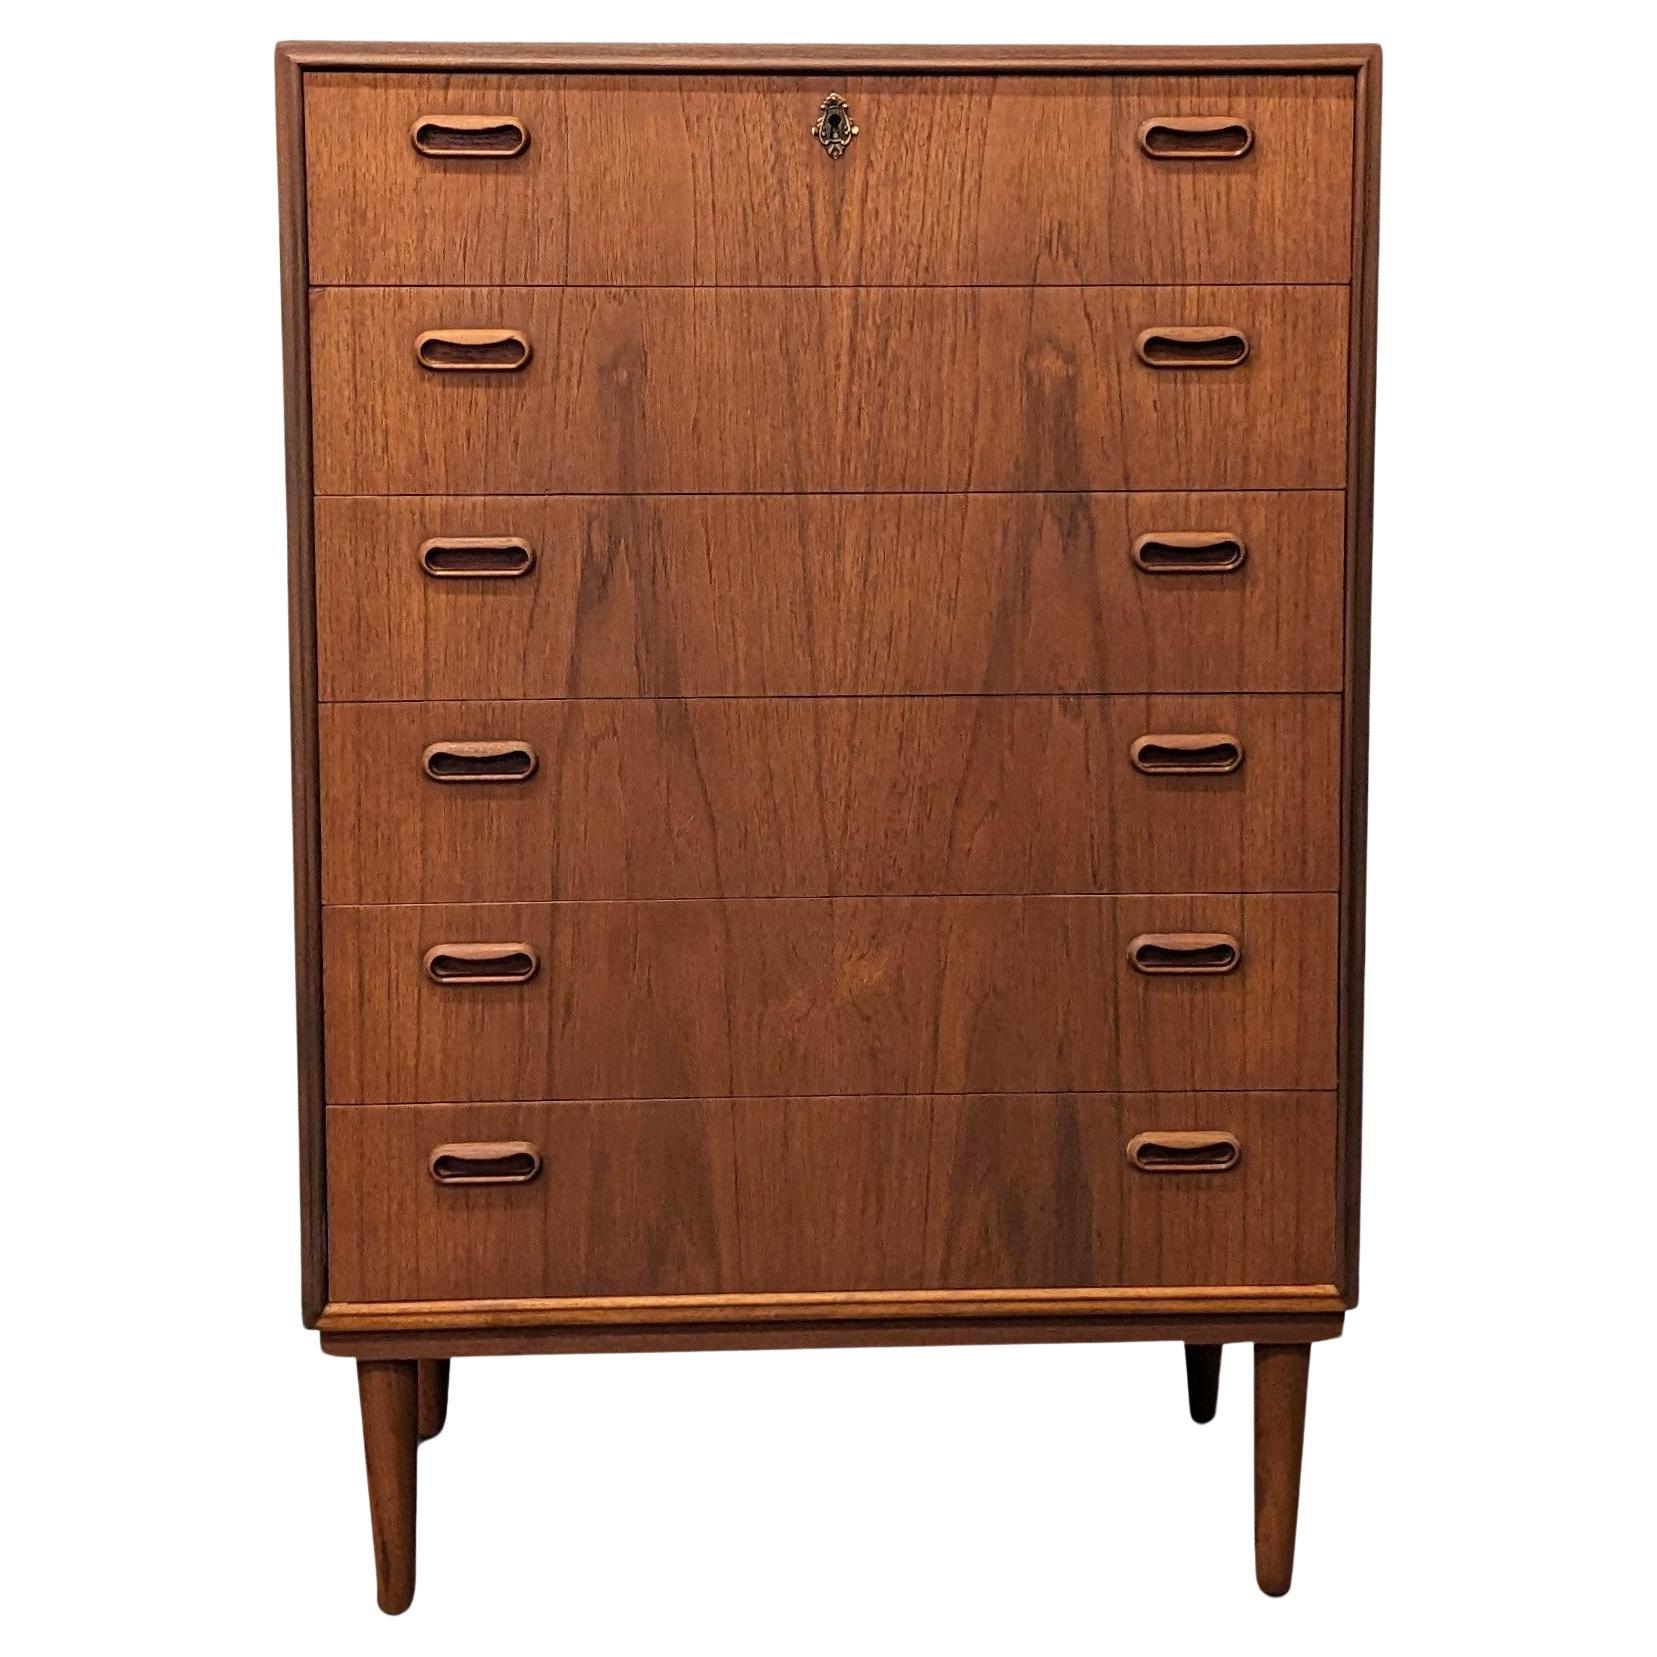 Vintage Danish Mid century Teak Dresser - 122373 For Sale